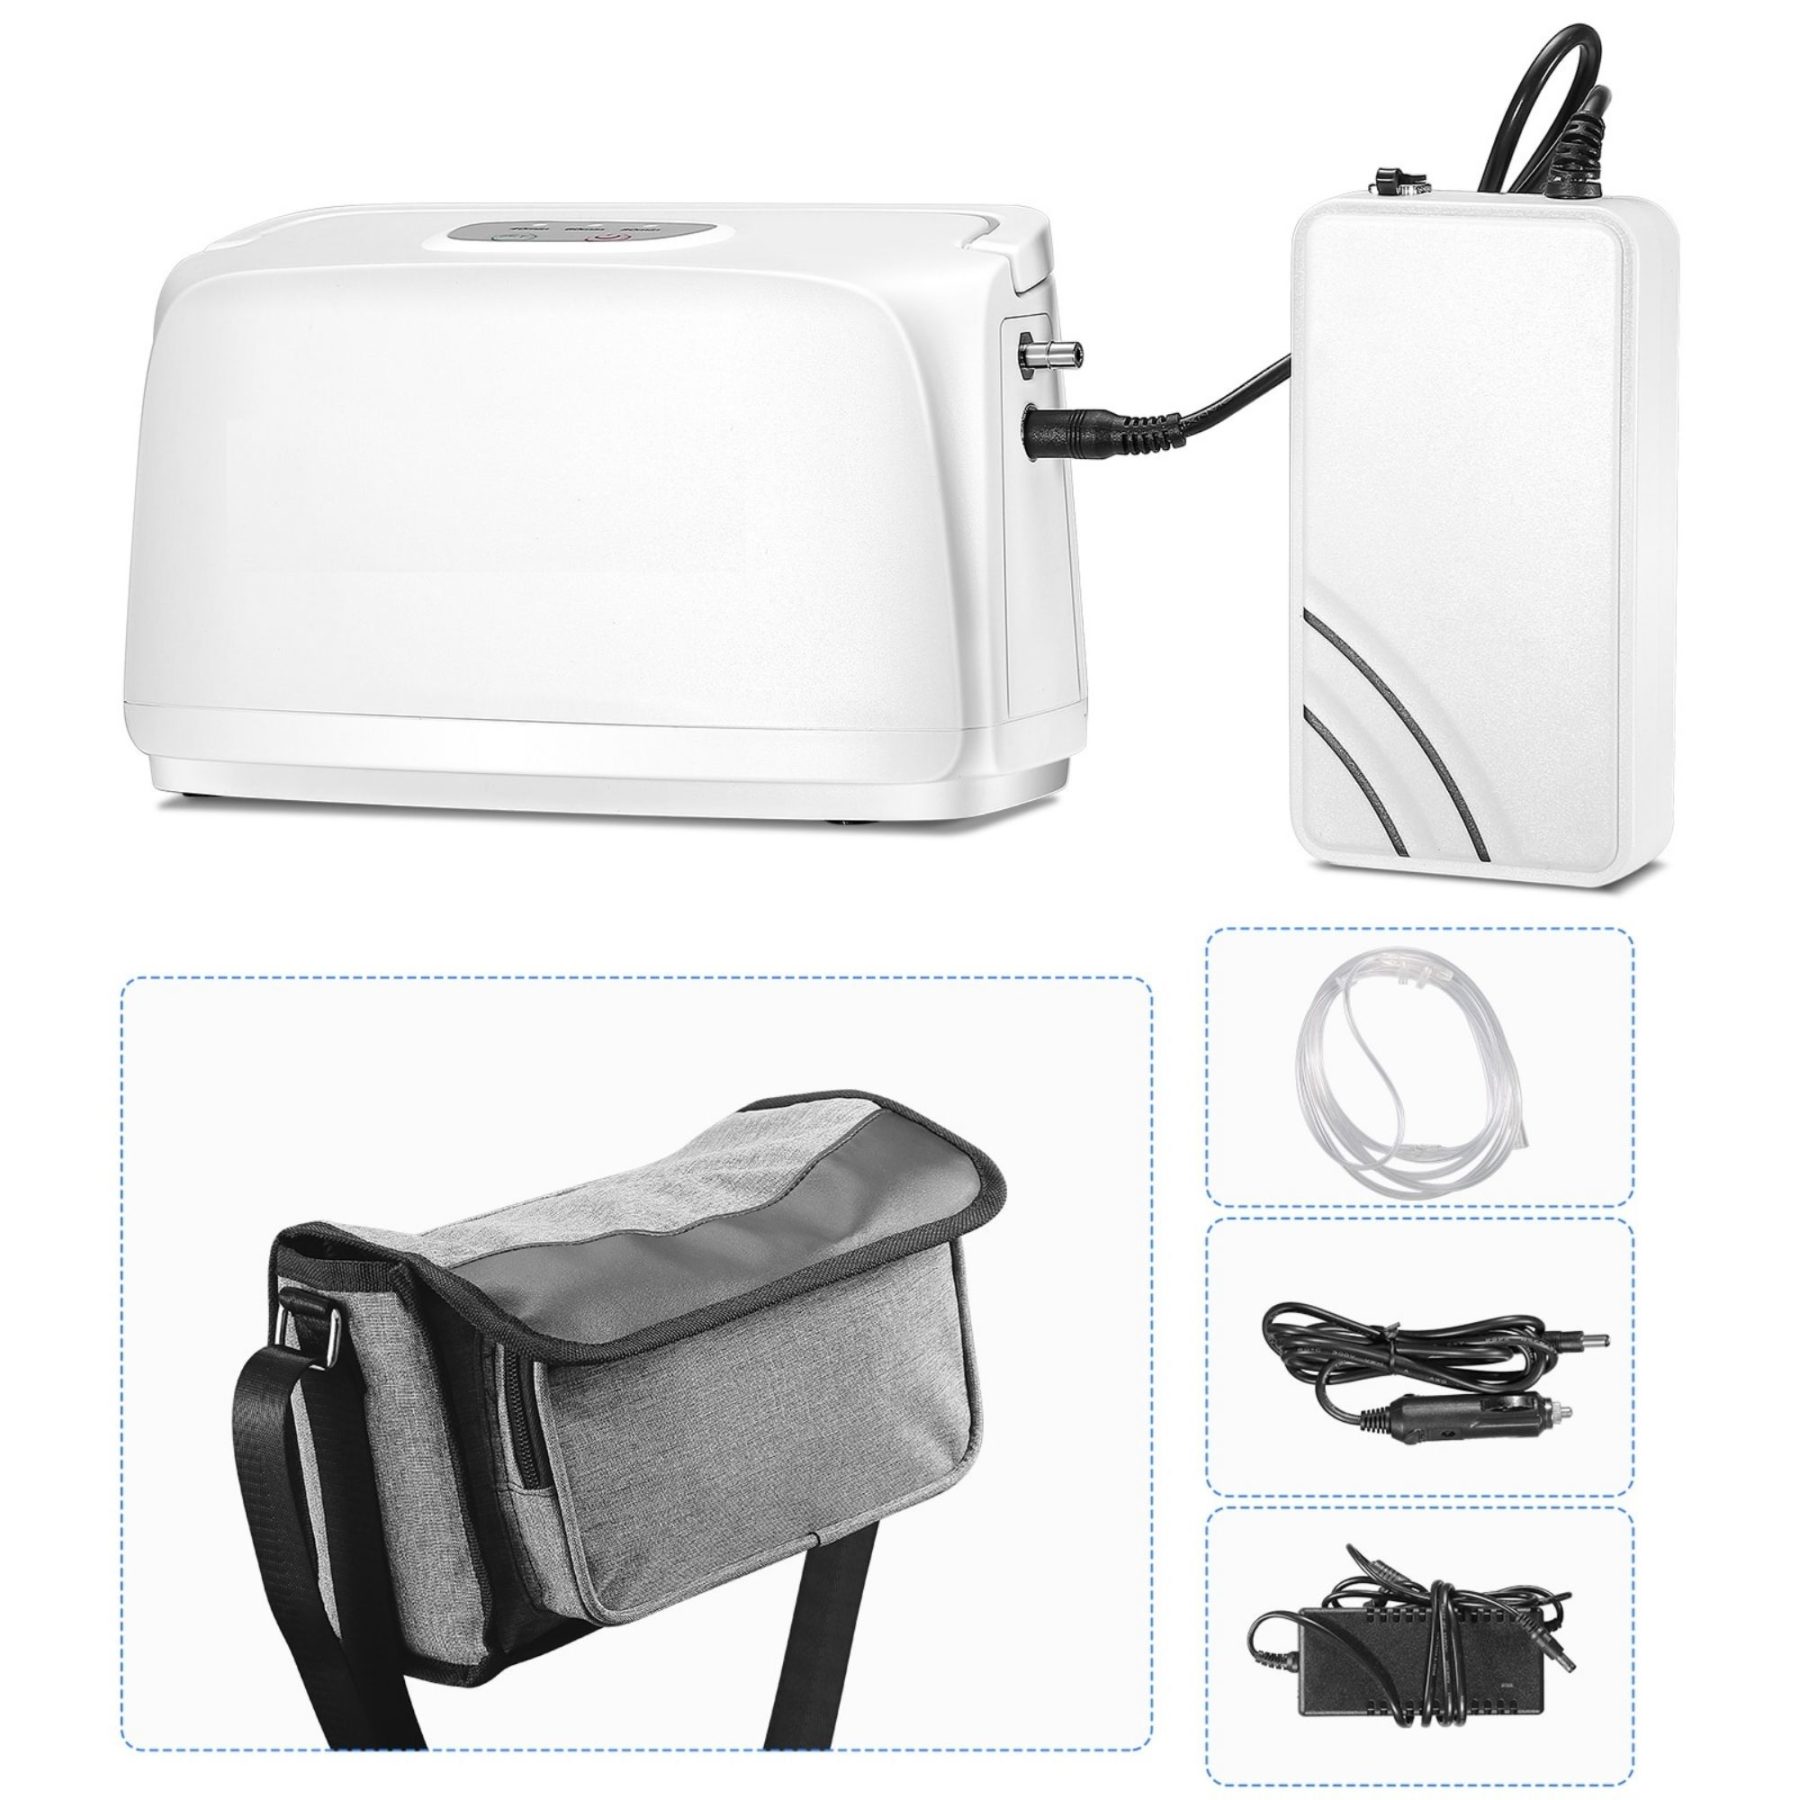 Moyeah Store Latest Mini Portable Home Oxygen Concentrator 3L/Min